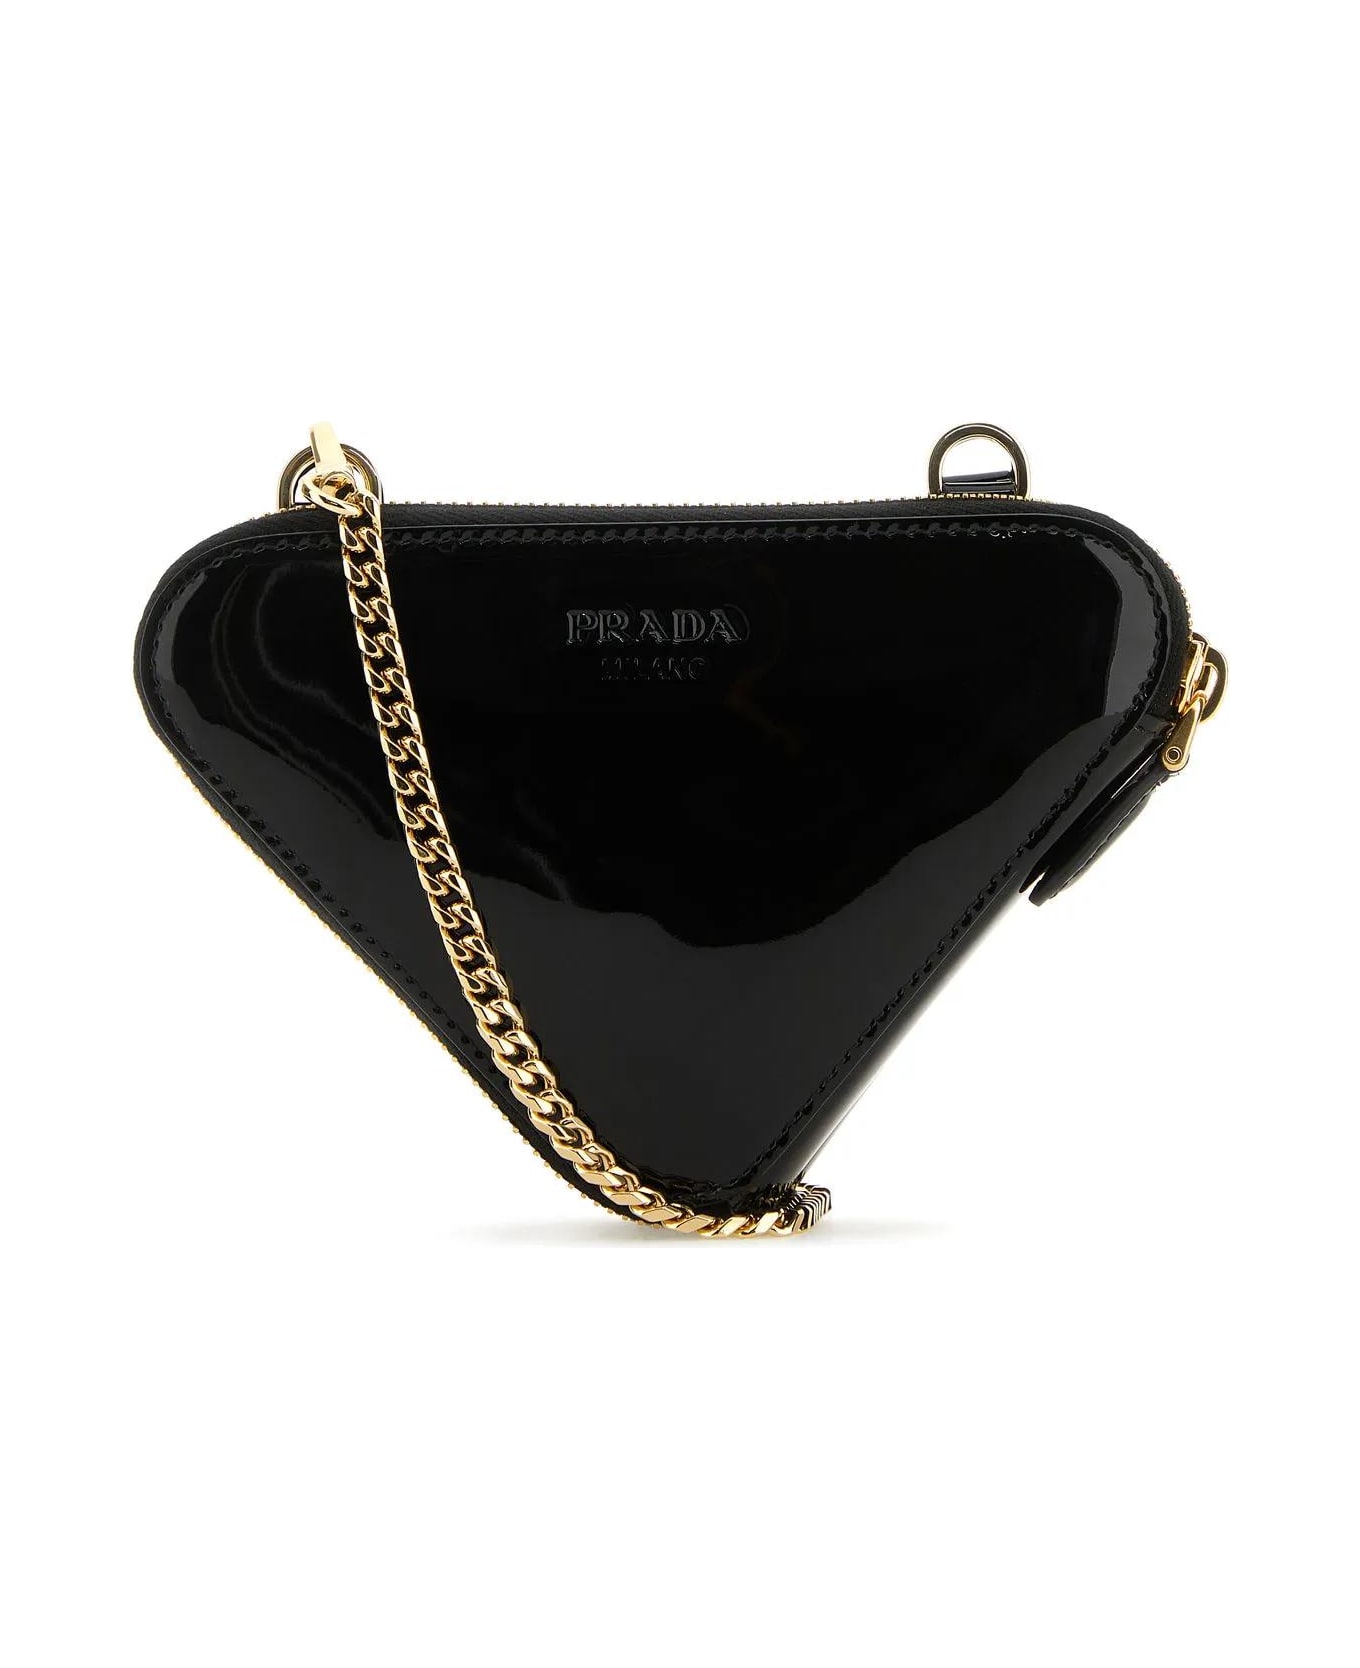 Prada Black Leather Handbag - Nero